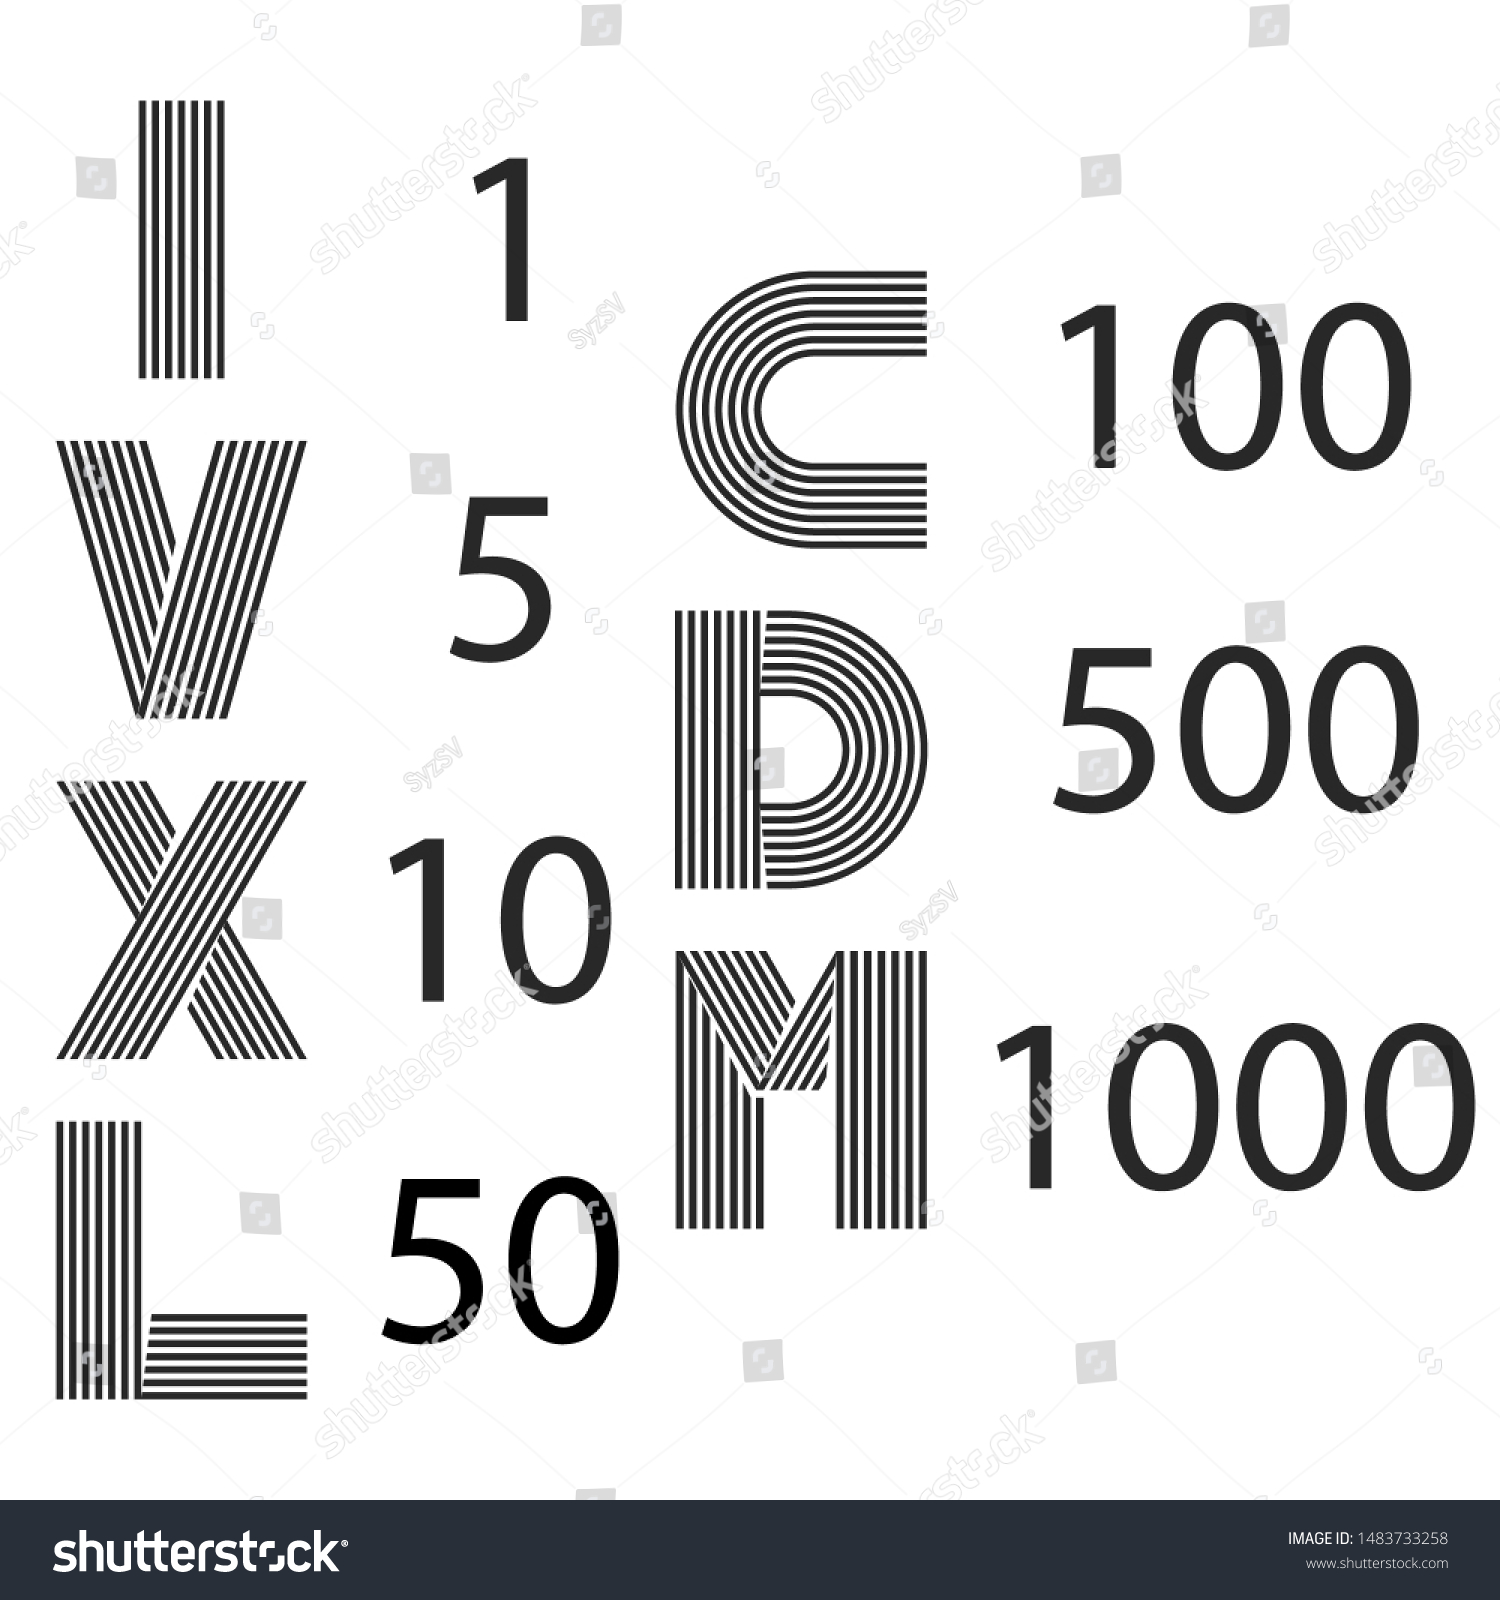 SVG of Set of roman numerals I, V, X, L, C, D, M for number design, creative math symbols made of thin parallel lines. svg